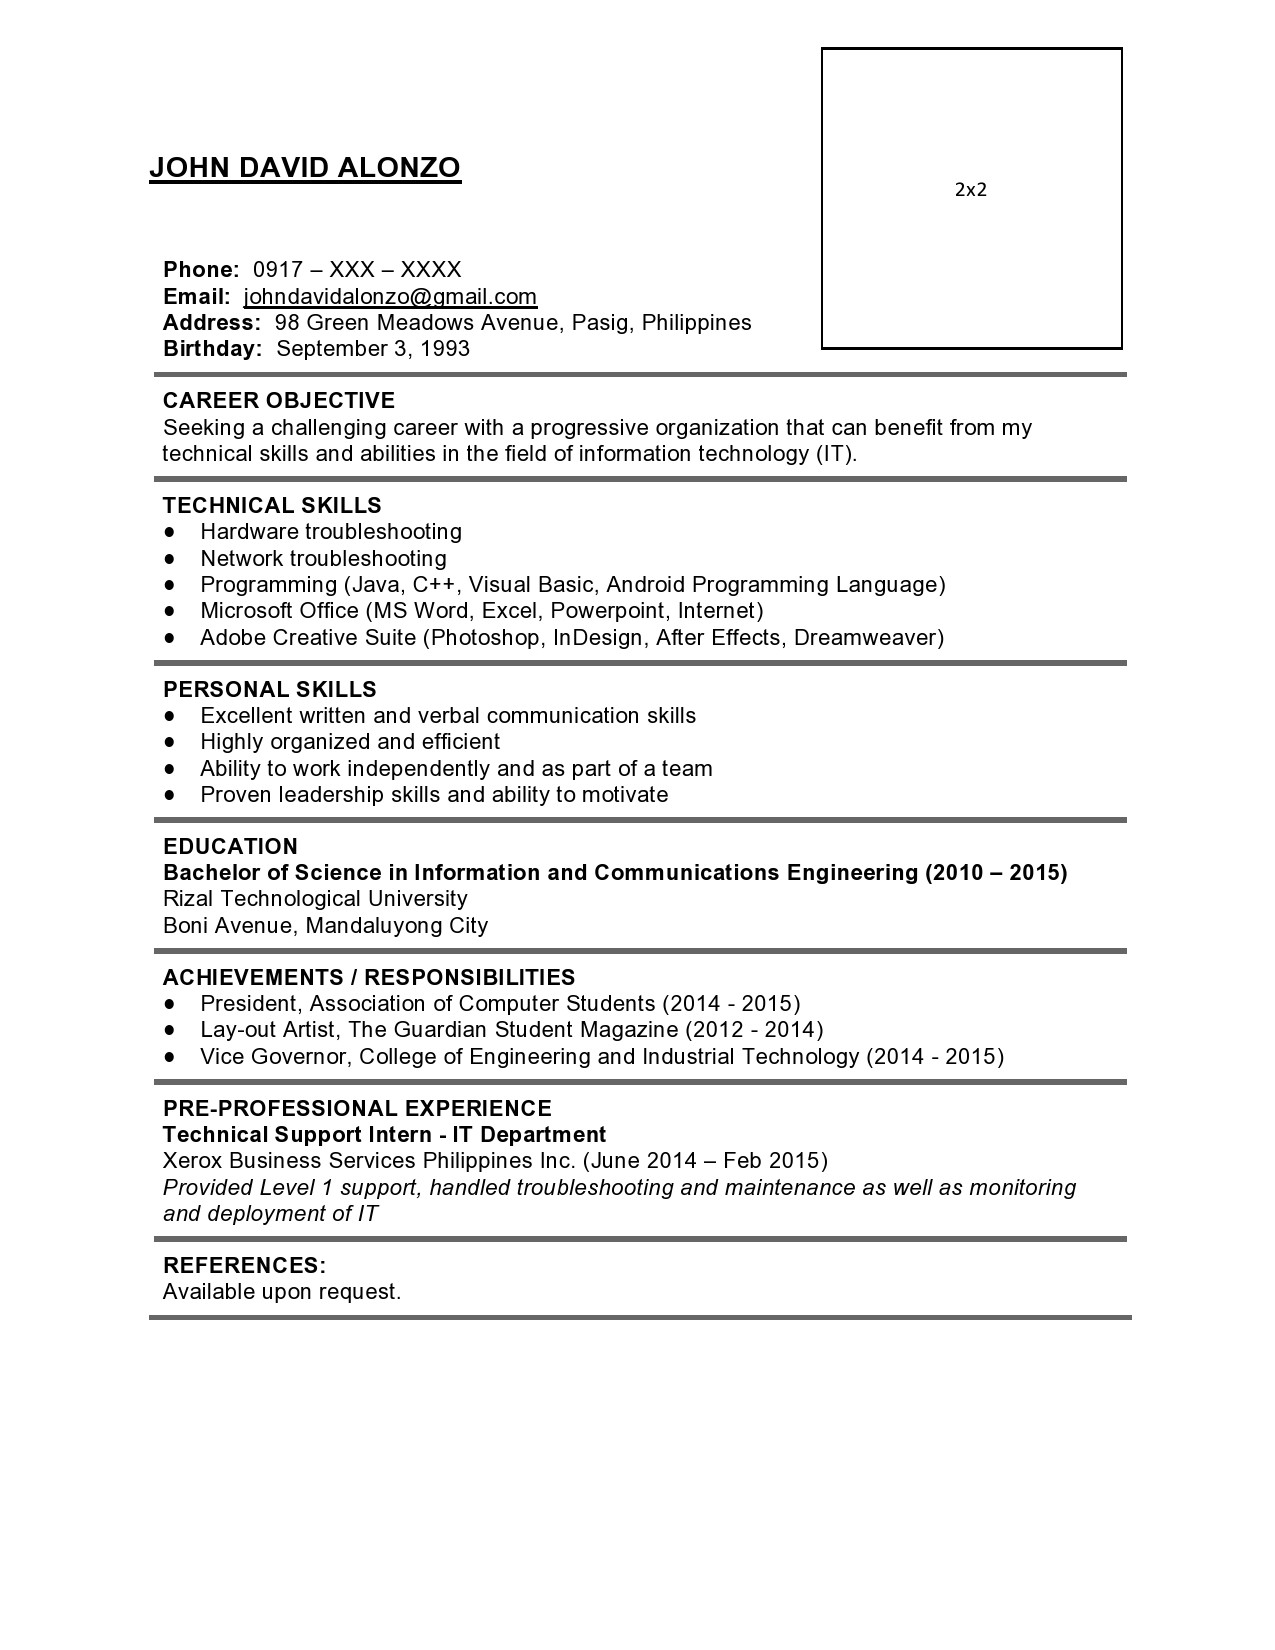 Resume format Sample for Job Application Philippines Sample Resume formats for Fresh Graduates